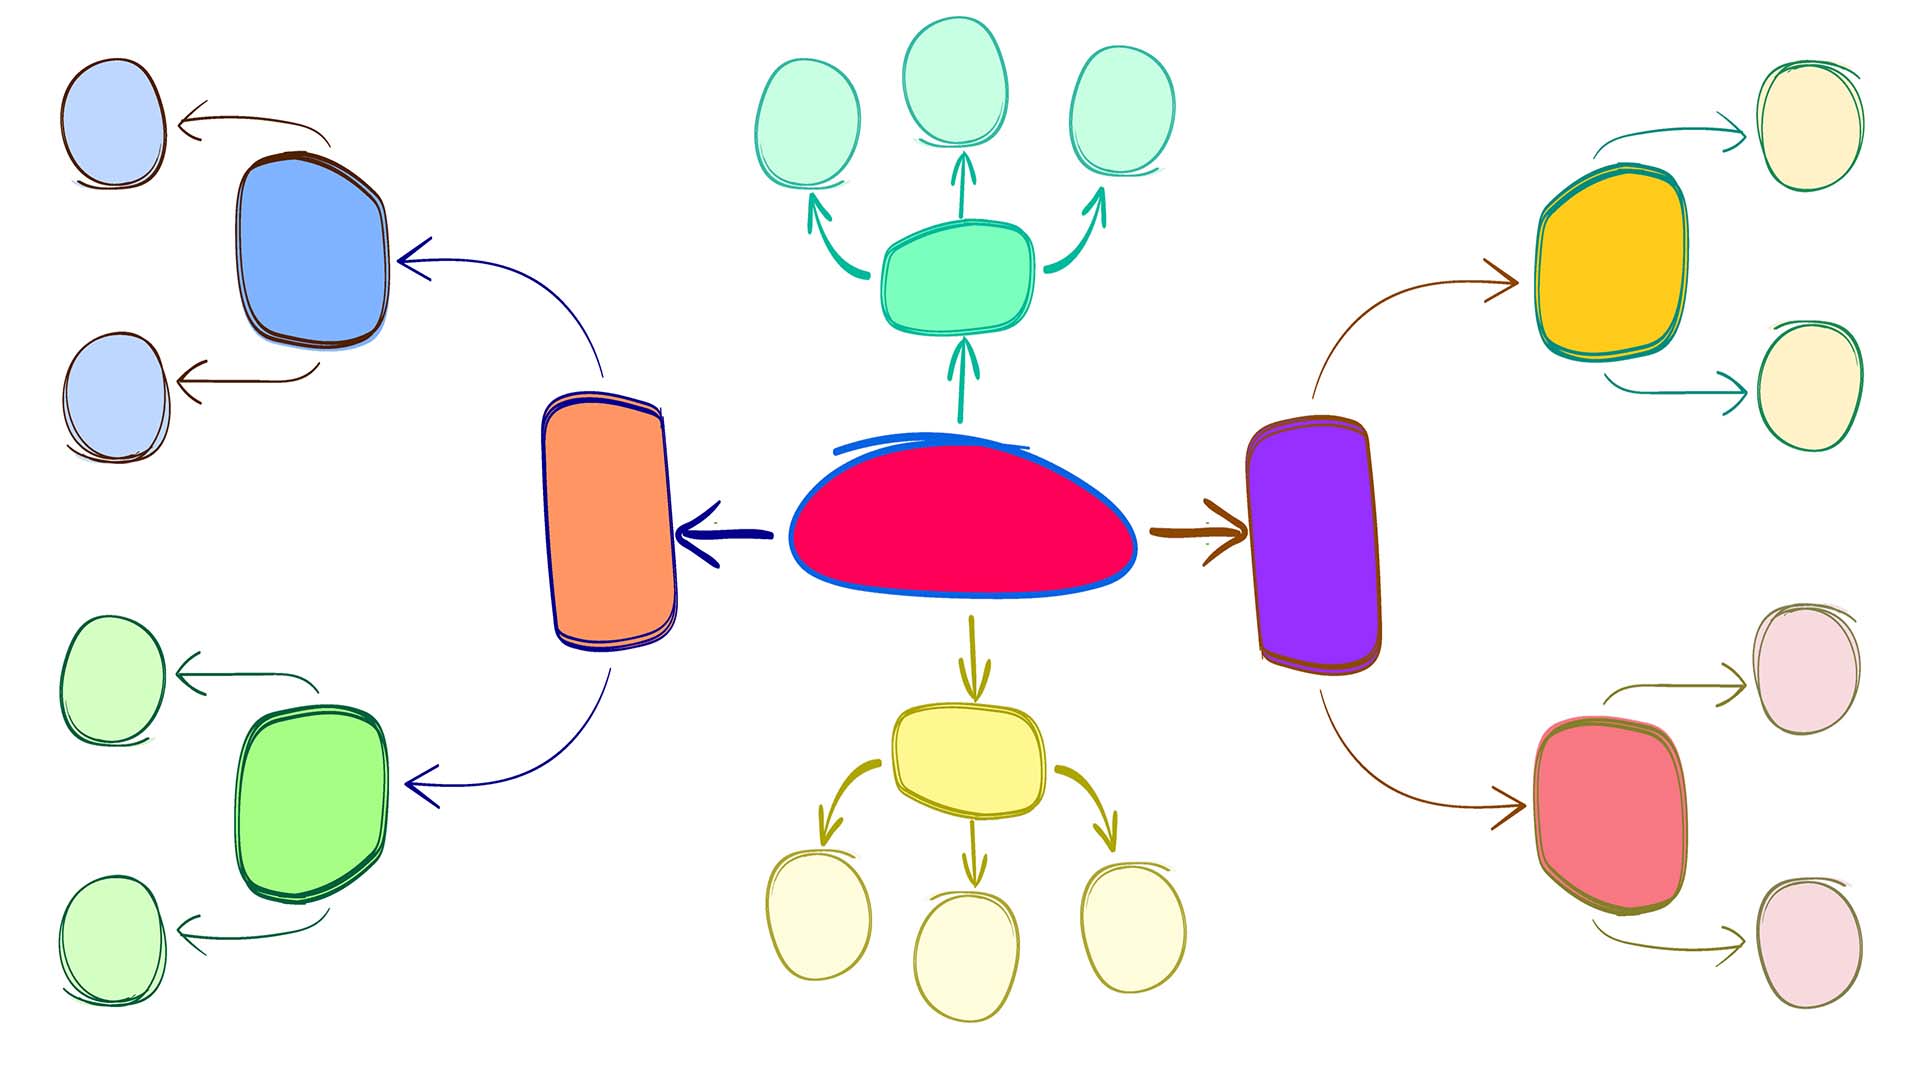 Affinity diagram